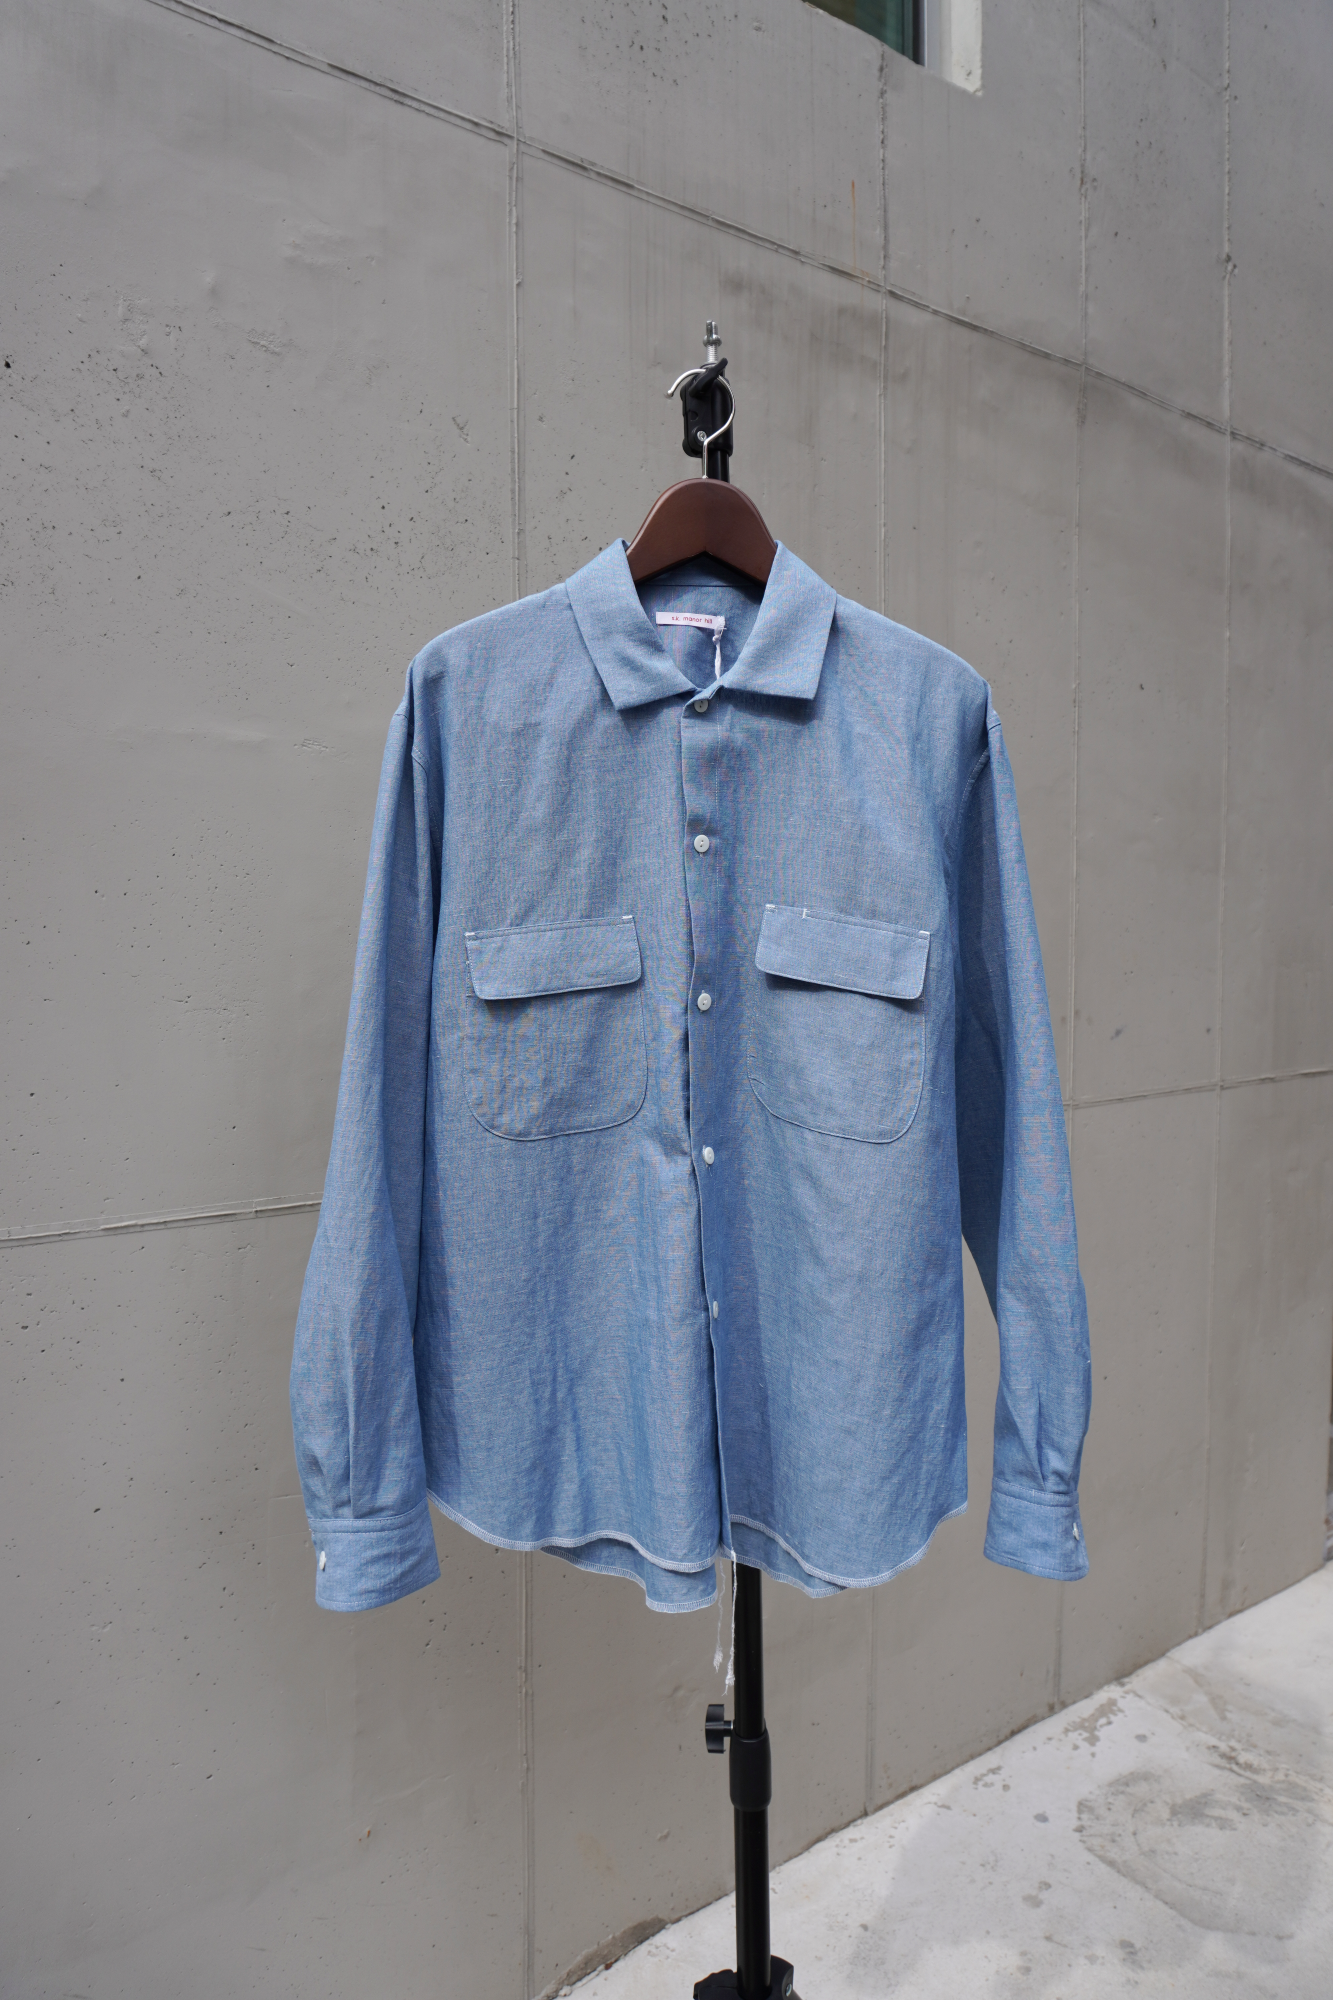 [S.K. MANOR HILL] Moil Shirt - Indigo Cotton/Linen